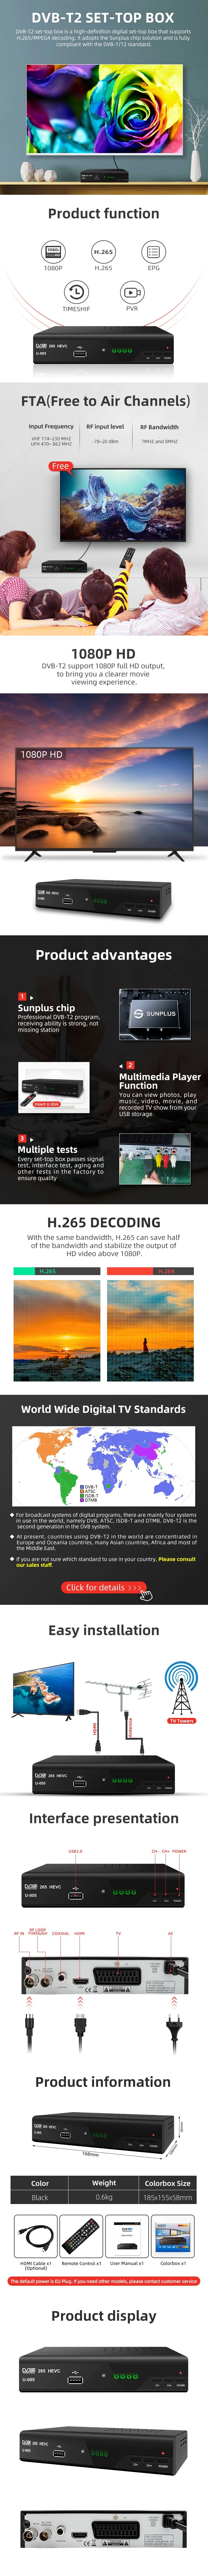 HD DVB-T2 Terrestrial Digital TV Receiver DVB-T2 H. 265 Hevc FTA Set Top Box